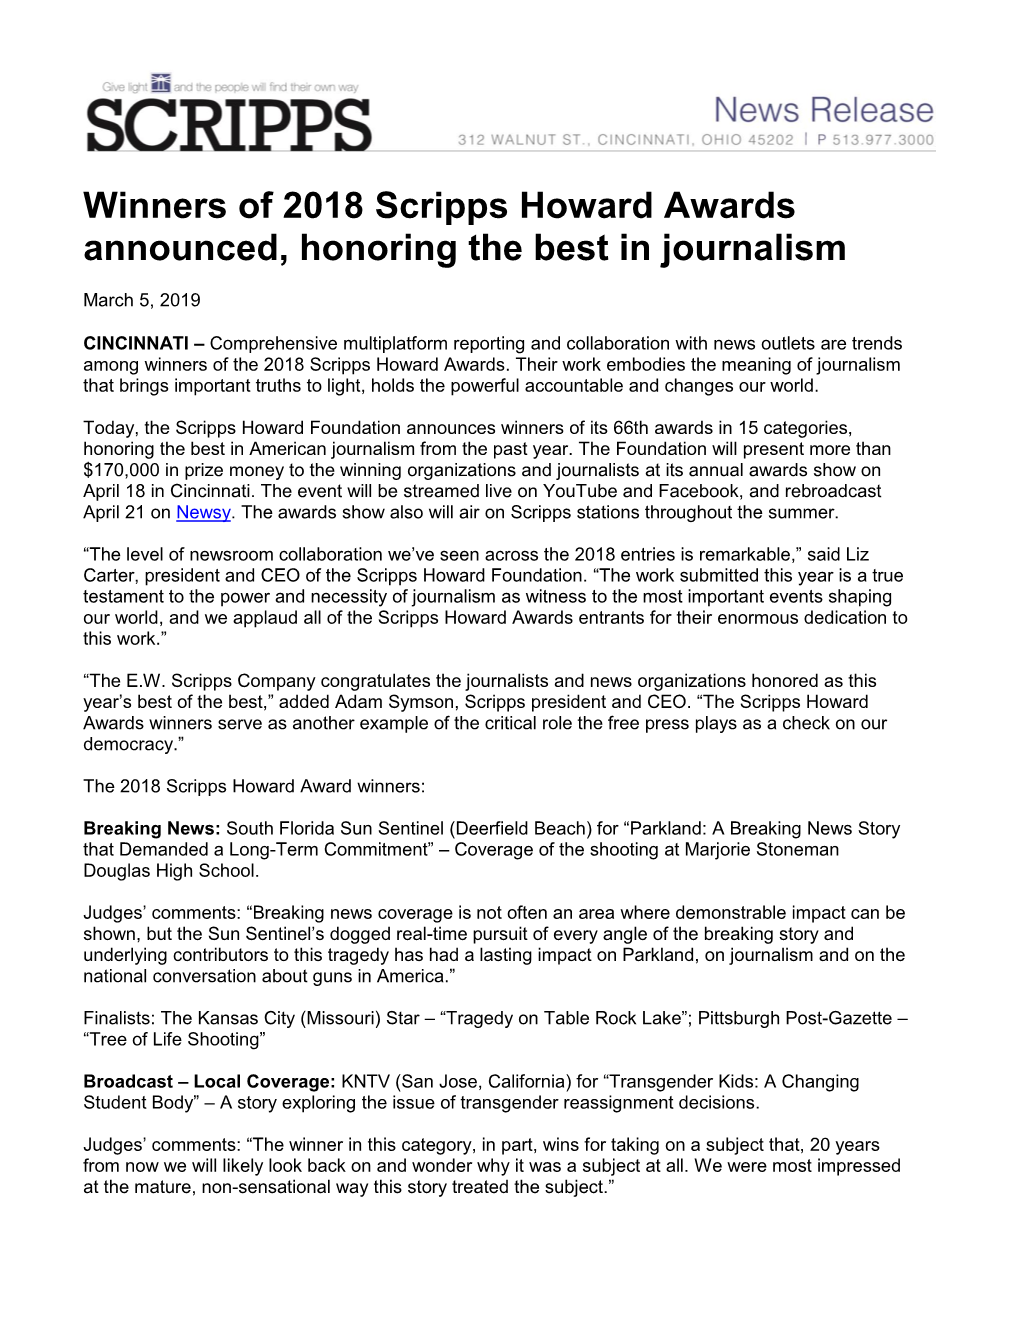 Winners of 2018 Scripps Howard Awards Announced, Honoring the Best in Journalism